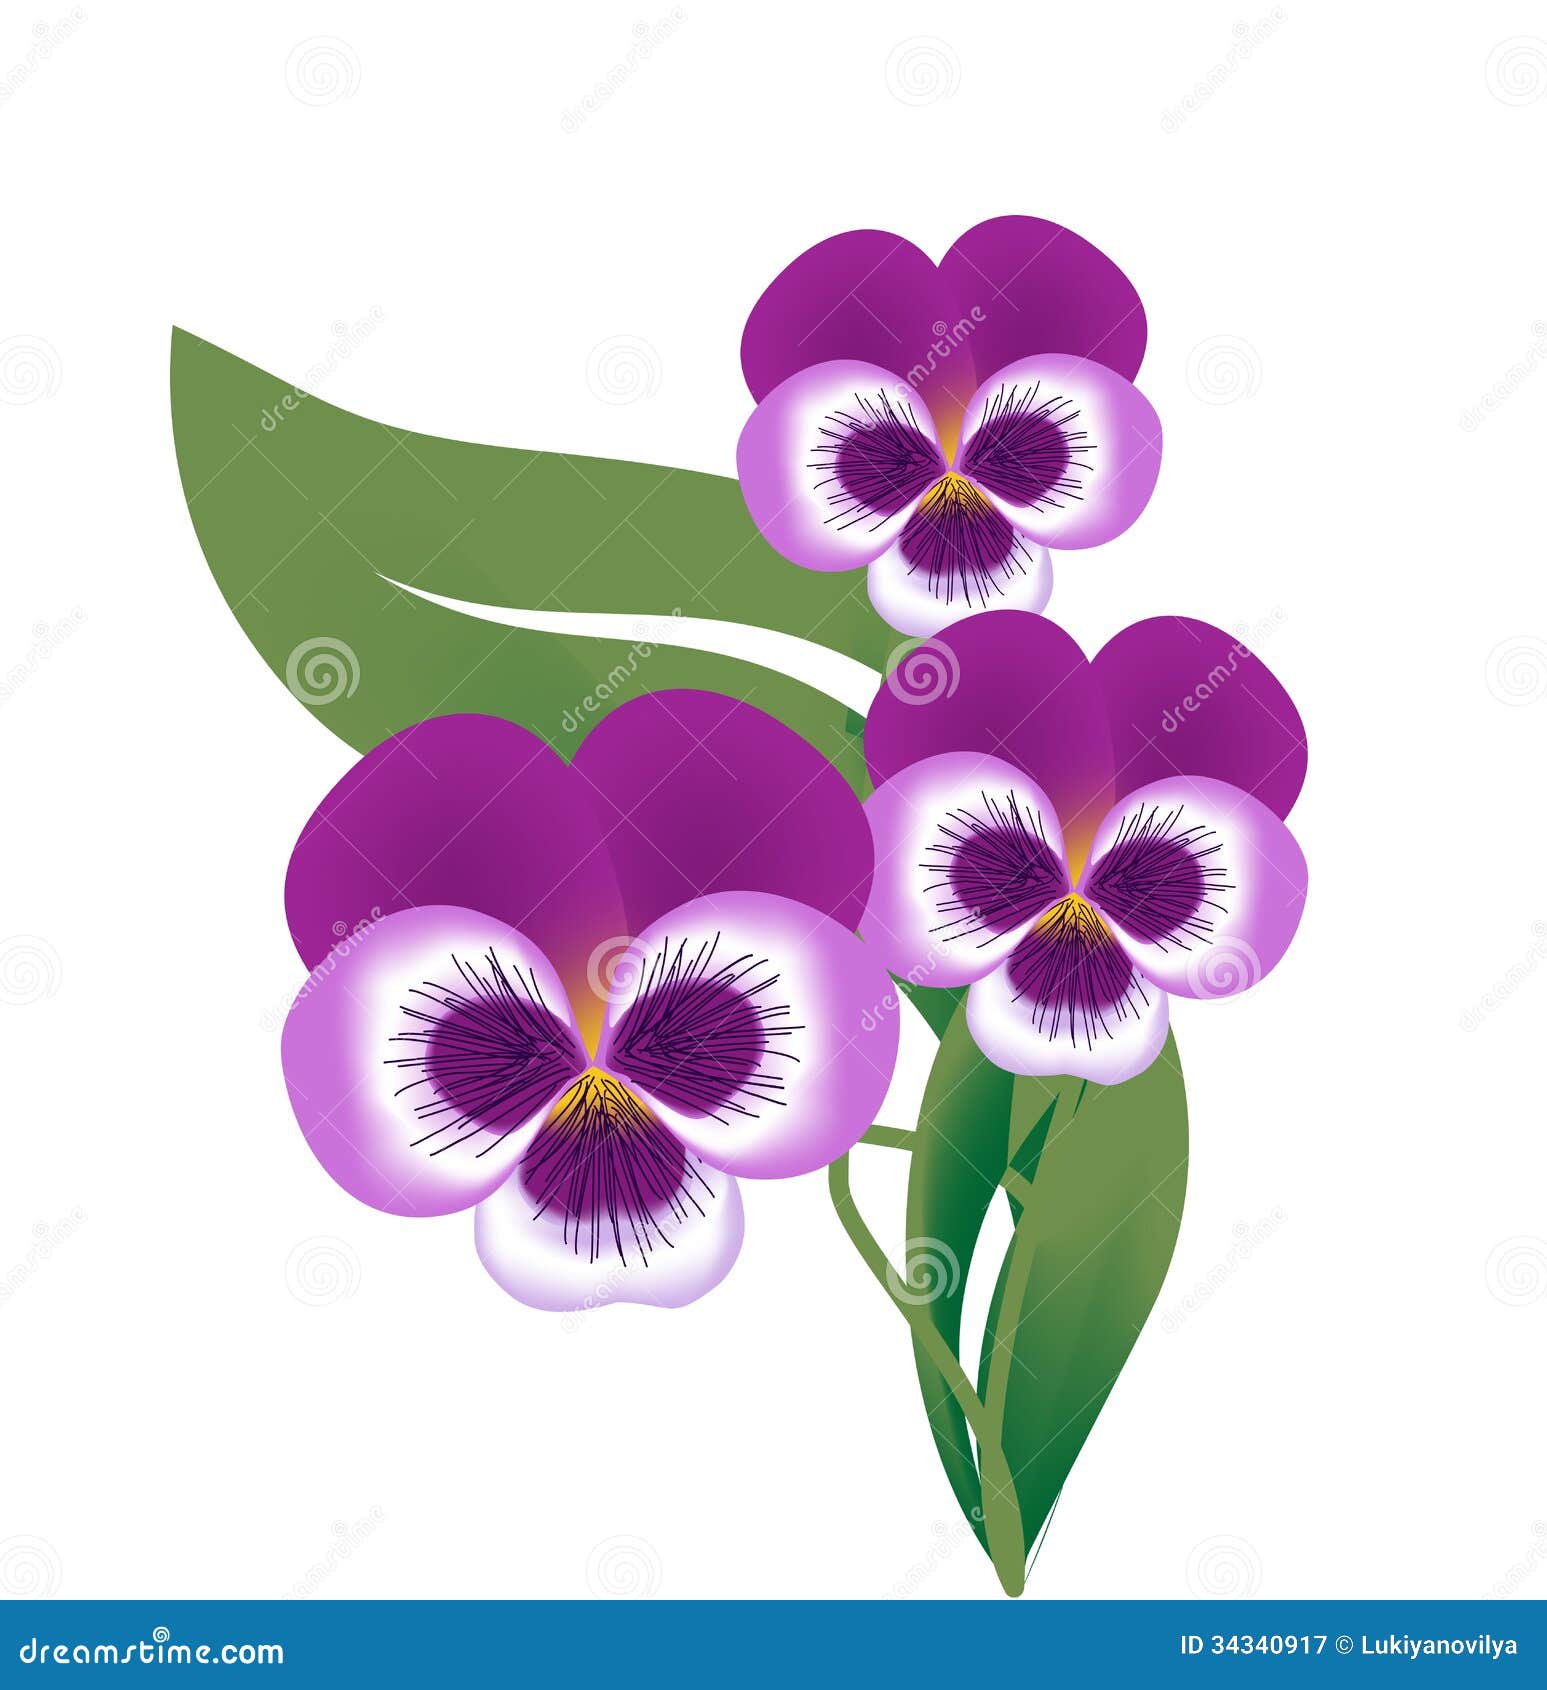 blossom of violet flower